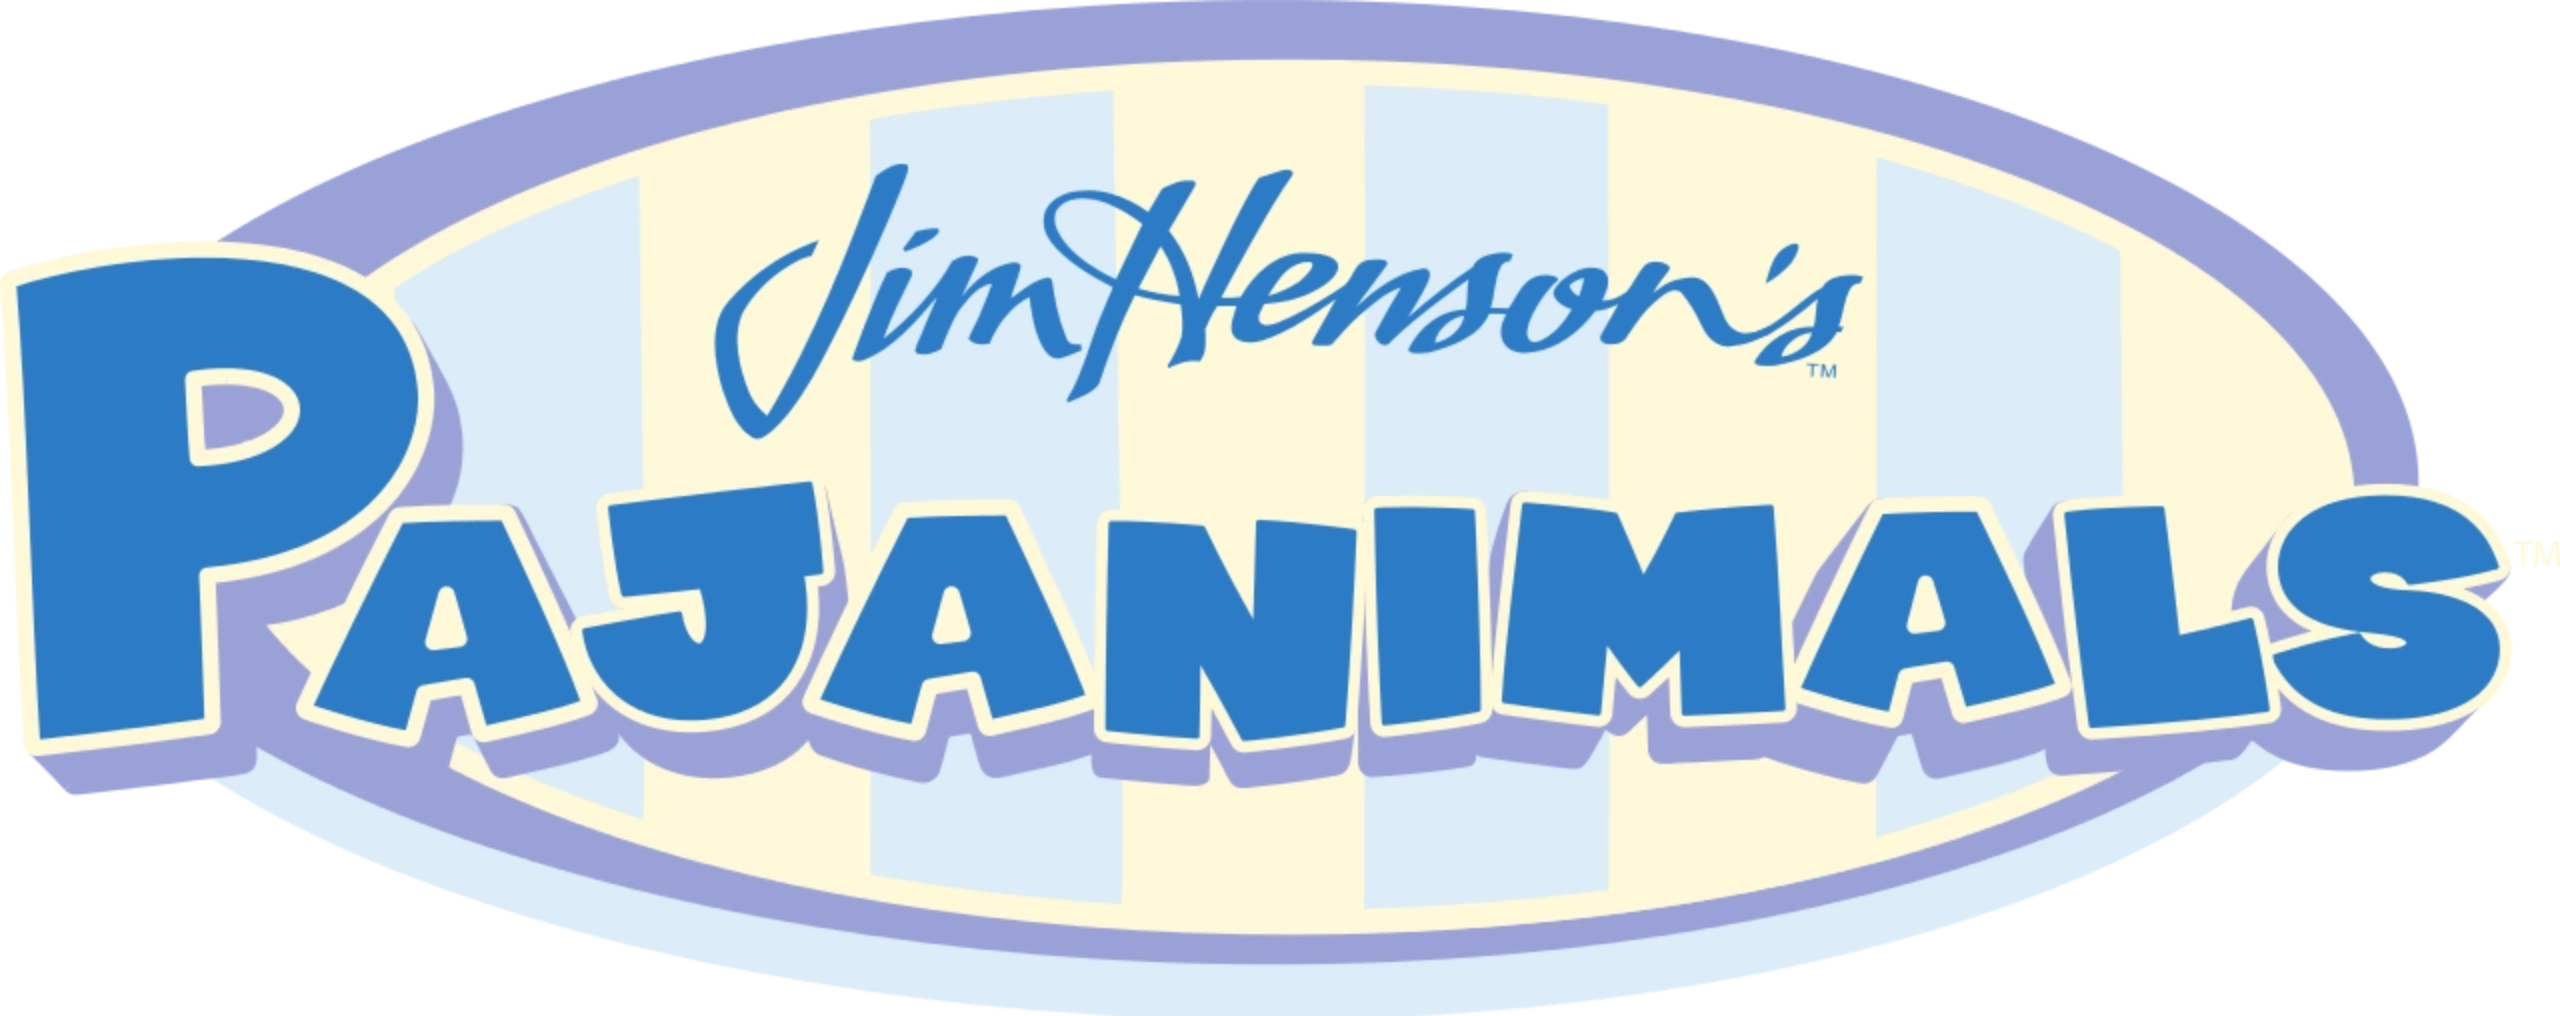 Jim Henson's Pajanimals Complete (1 DVD Box Set)